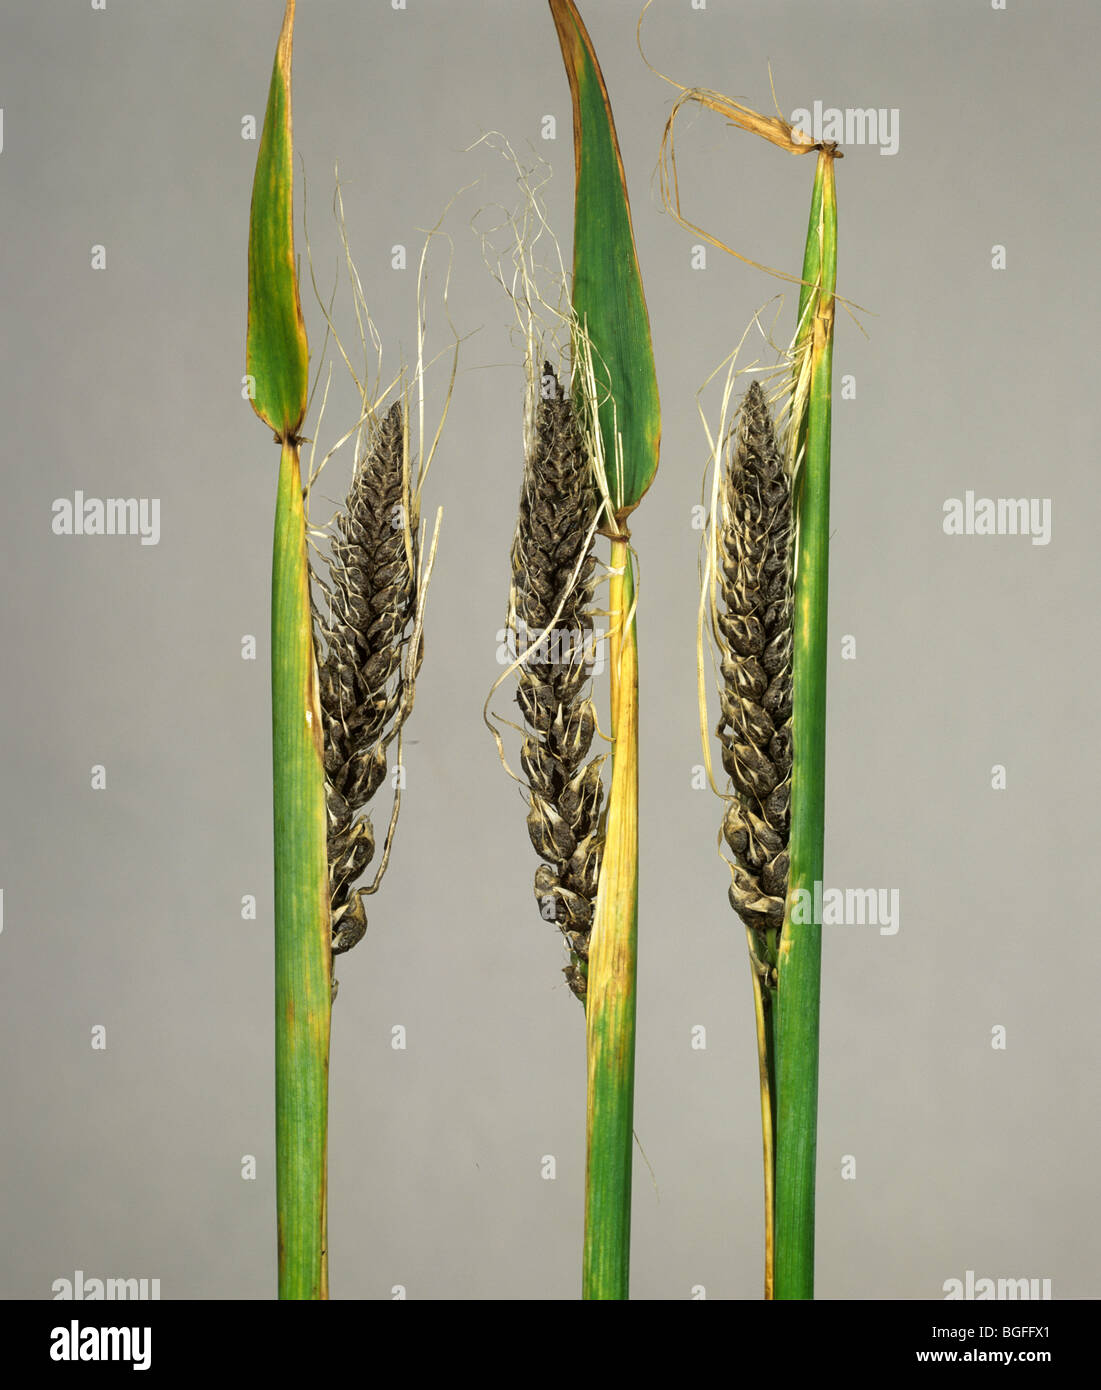 Covered smut (Ustilago segetum) smutted ears of barley Stock Photo